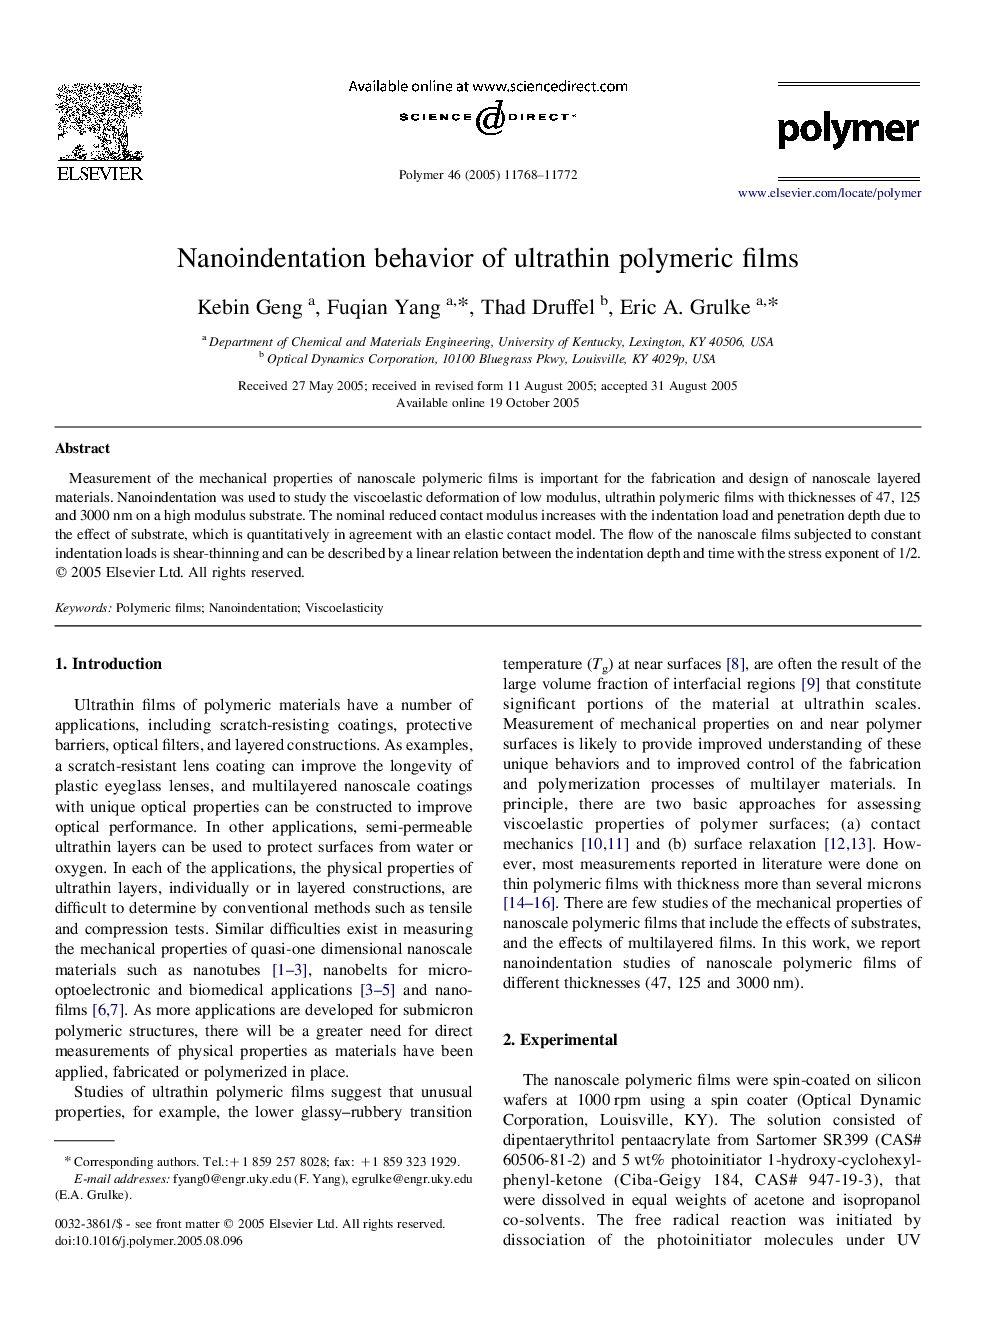 Nanoindentation behavior of ultrathin polymeric films